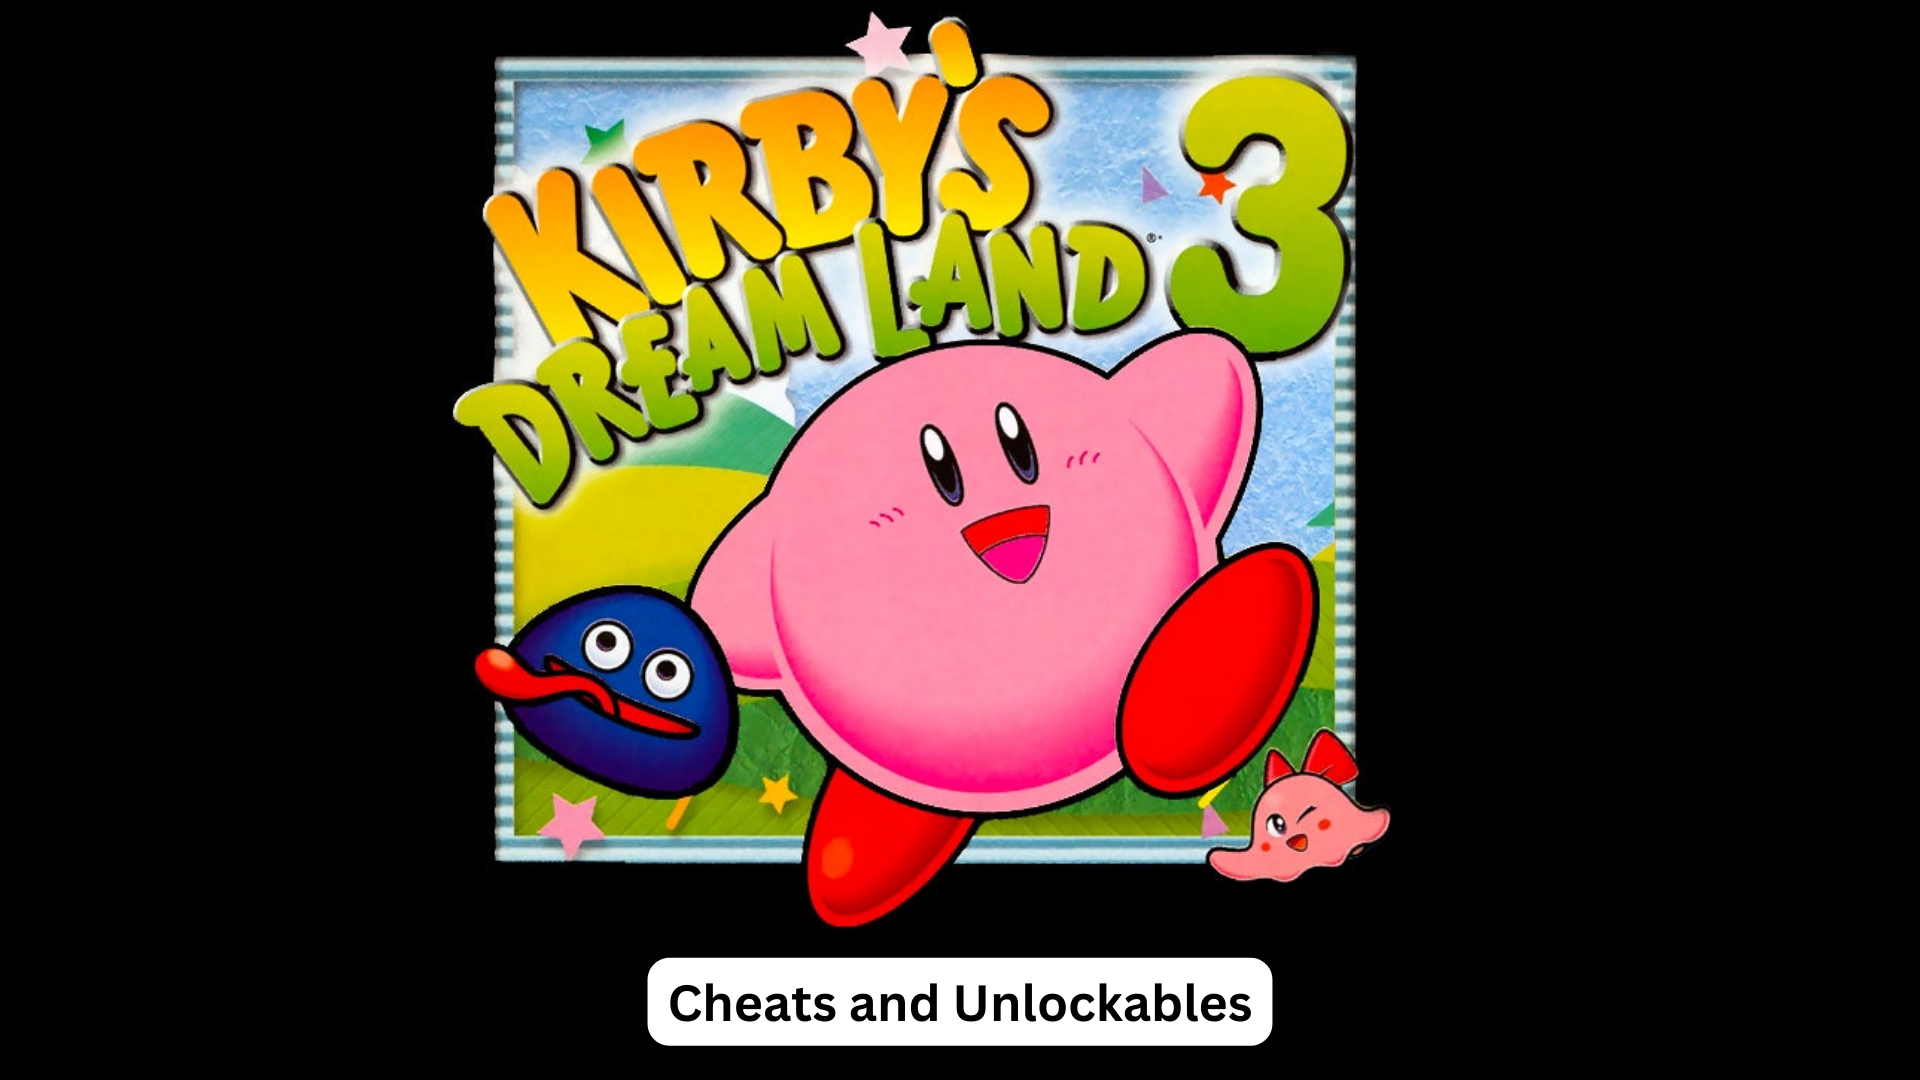 kirby's dream land 3 cheats and unlockables